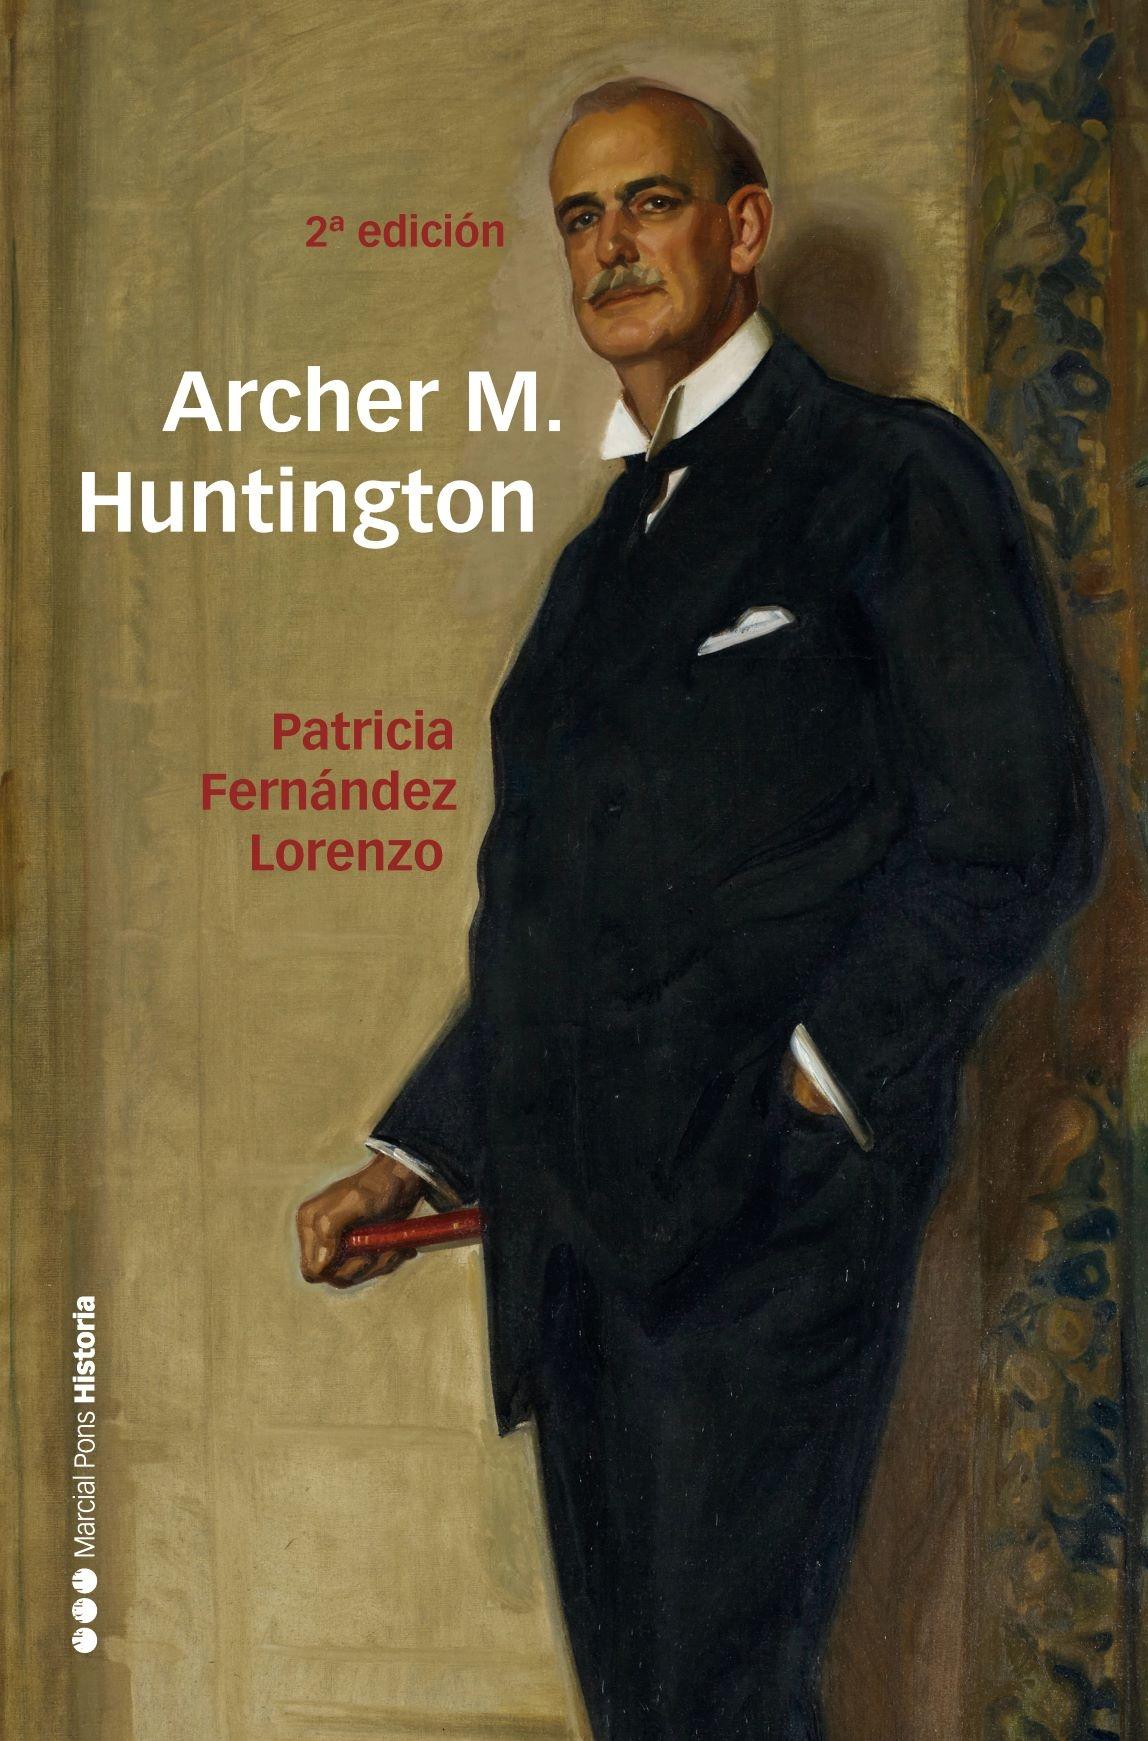 ARCHER M. HUNTINGTON. "EL FUNDADOR DE LA HISPANIC SOCIETY OF AMERICA EN ESPAÑA"